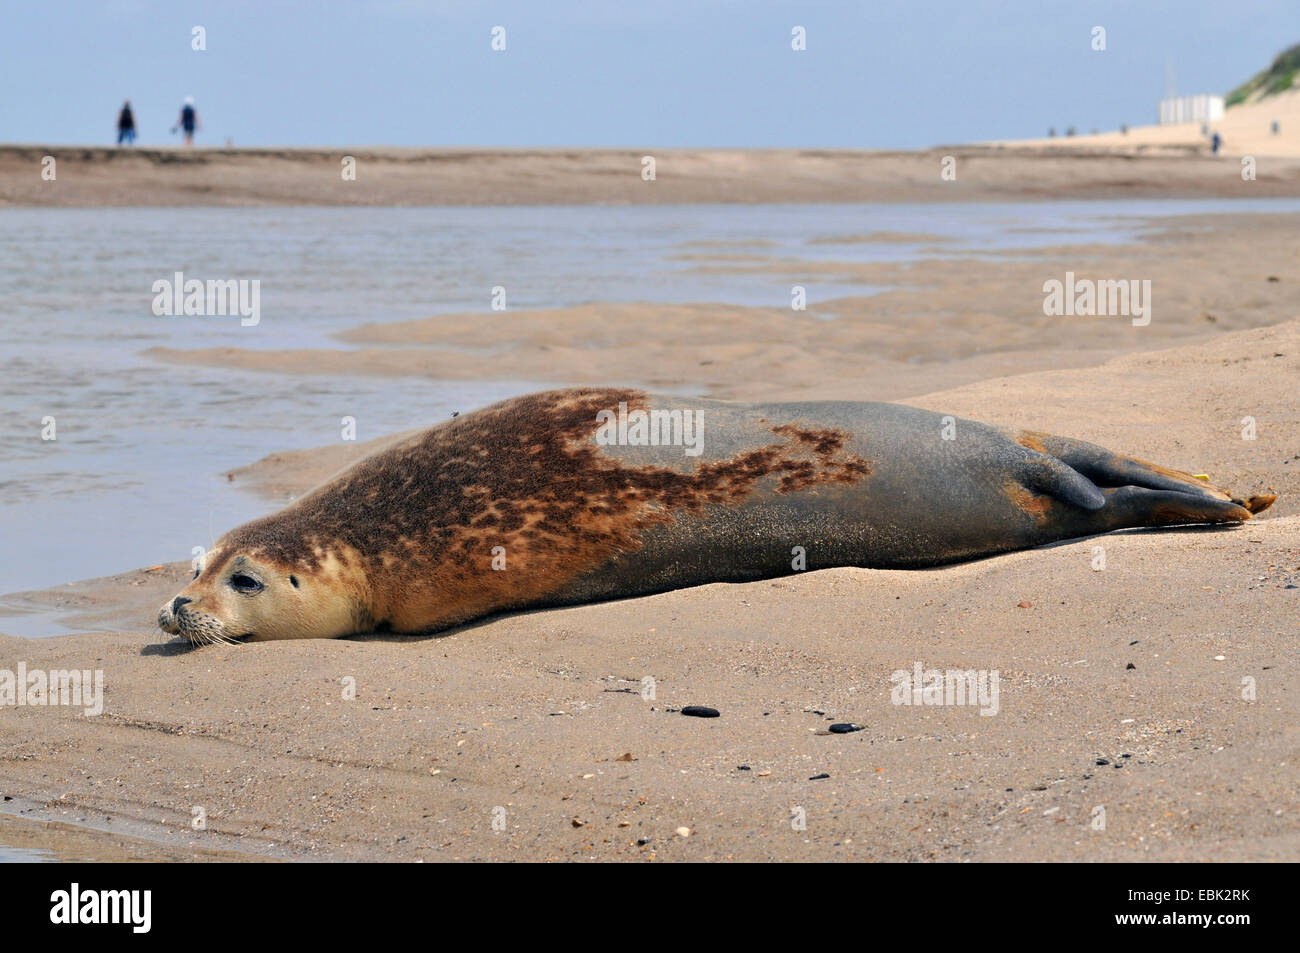 harbor seal, common seal (Phoca vitulina), ill seal lying on sandy beach, Netherlands, Zeeland Stock Photo